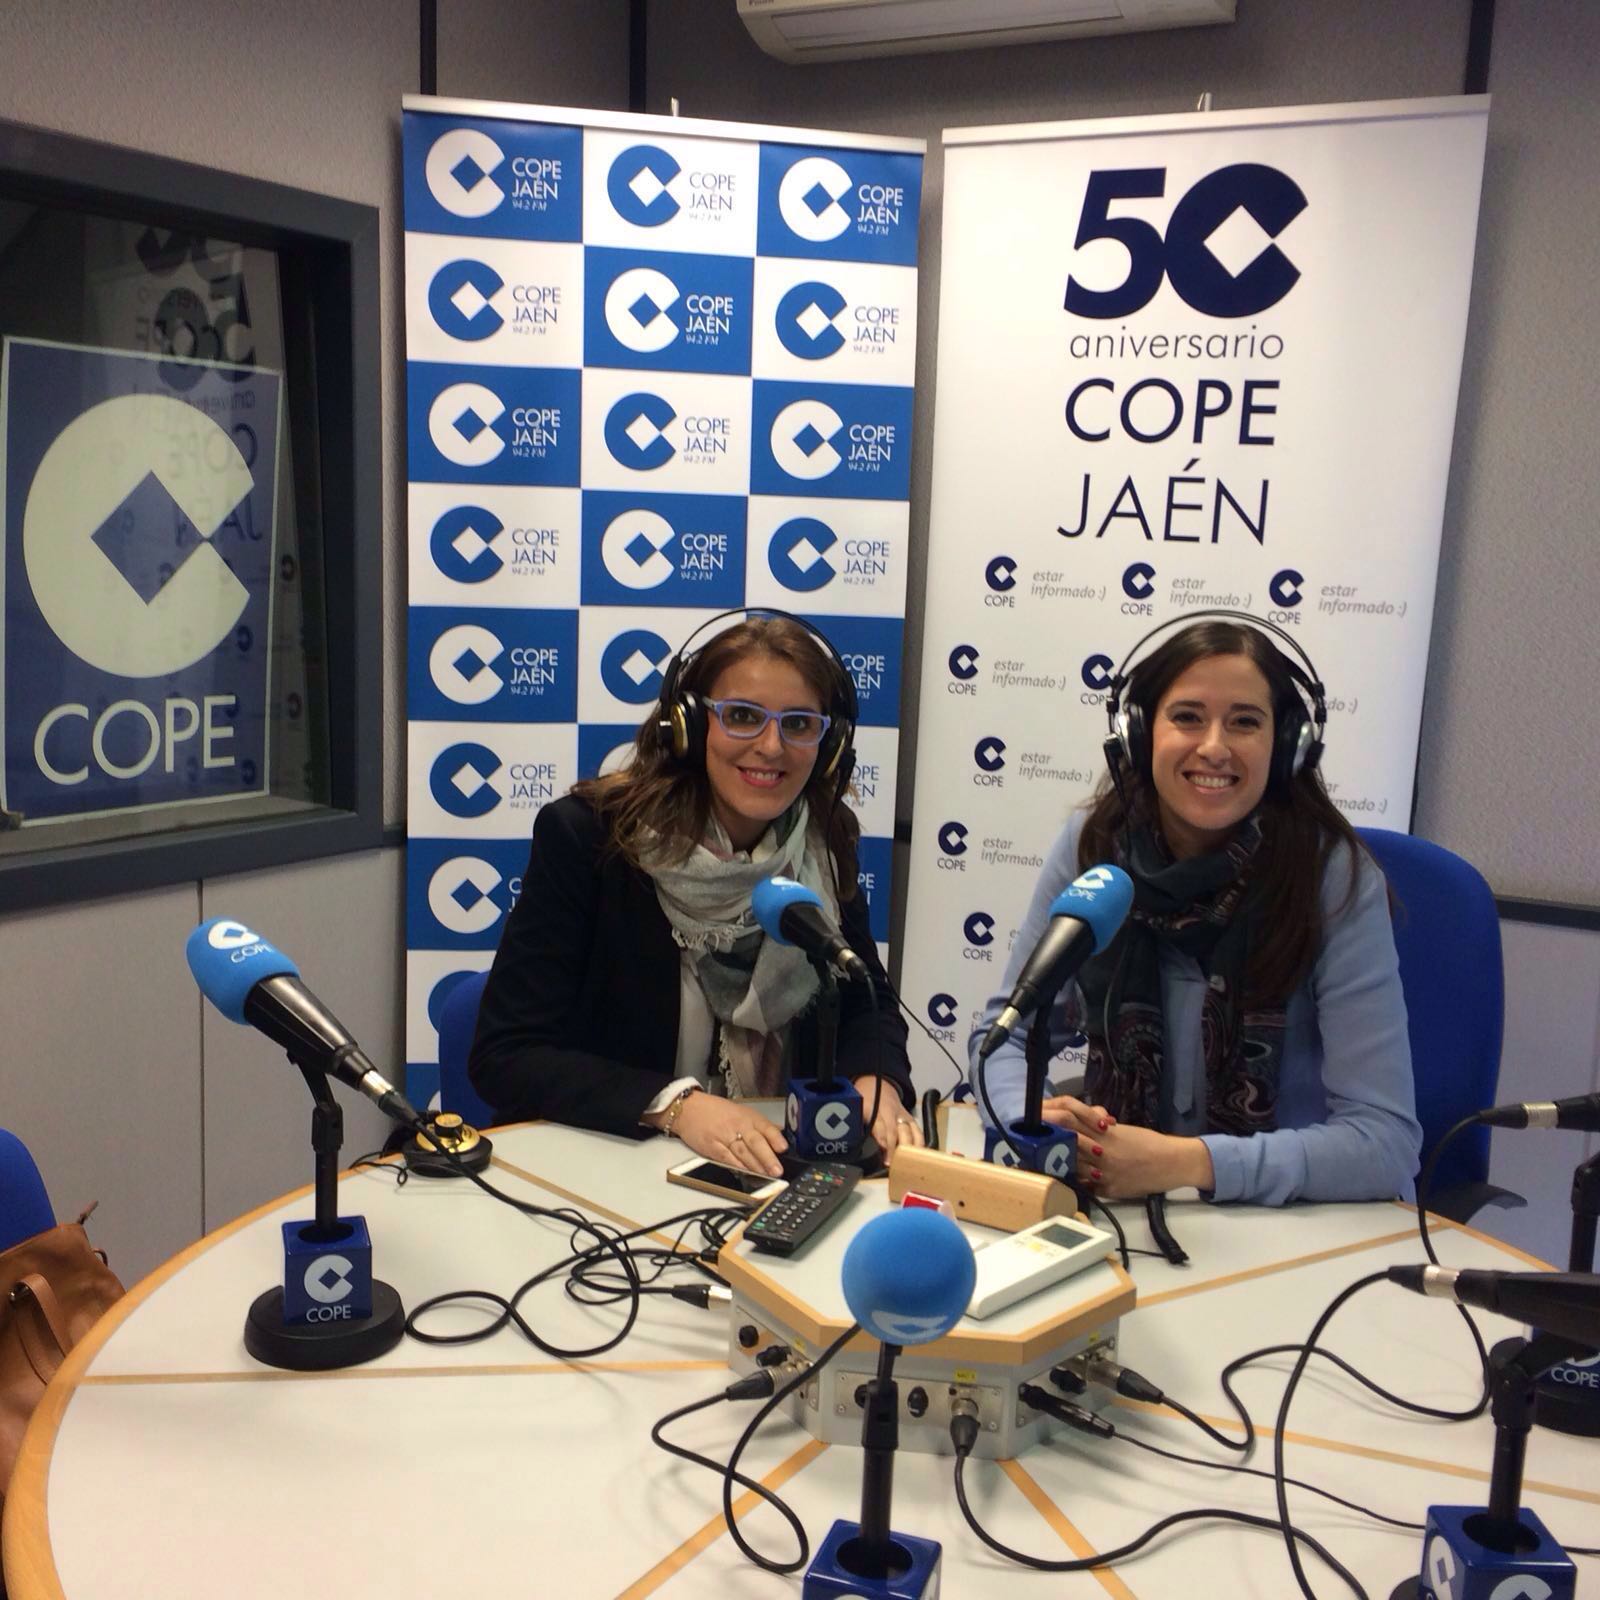 Entrevista a Productos Mata en #COPEJAEN mañana a partir de las 13:00. Gracias a @hispacolex #empresas #jaen